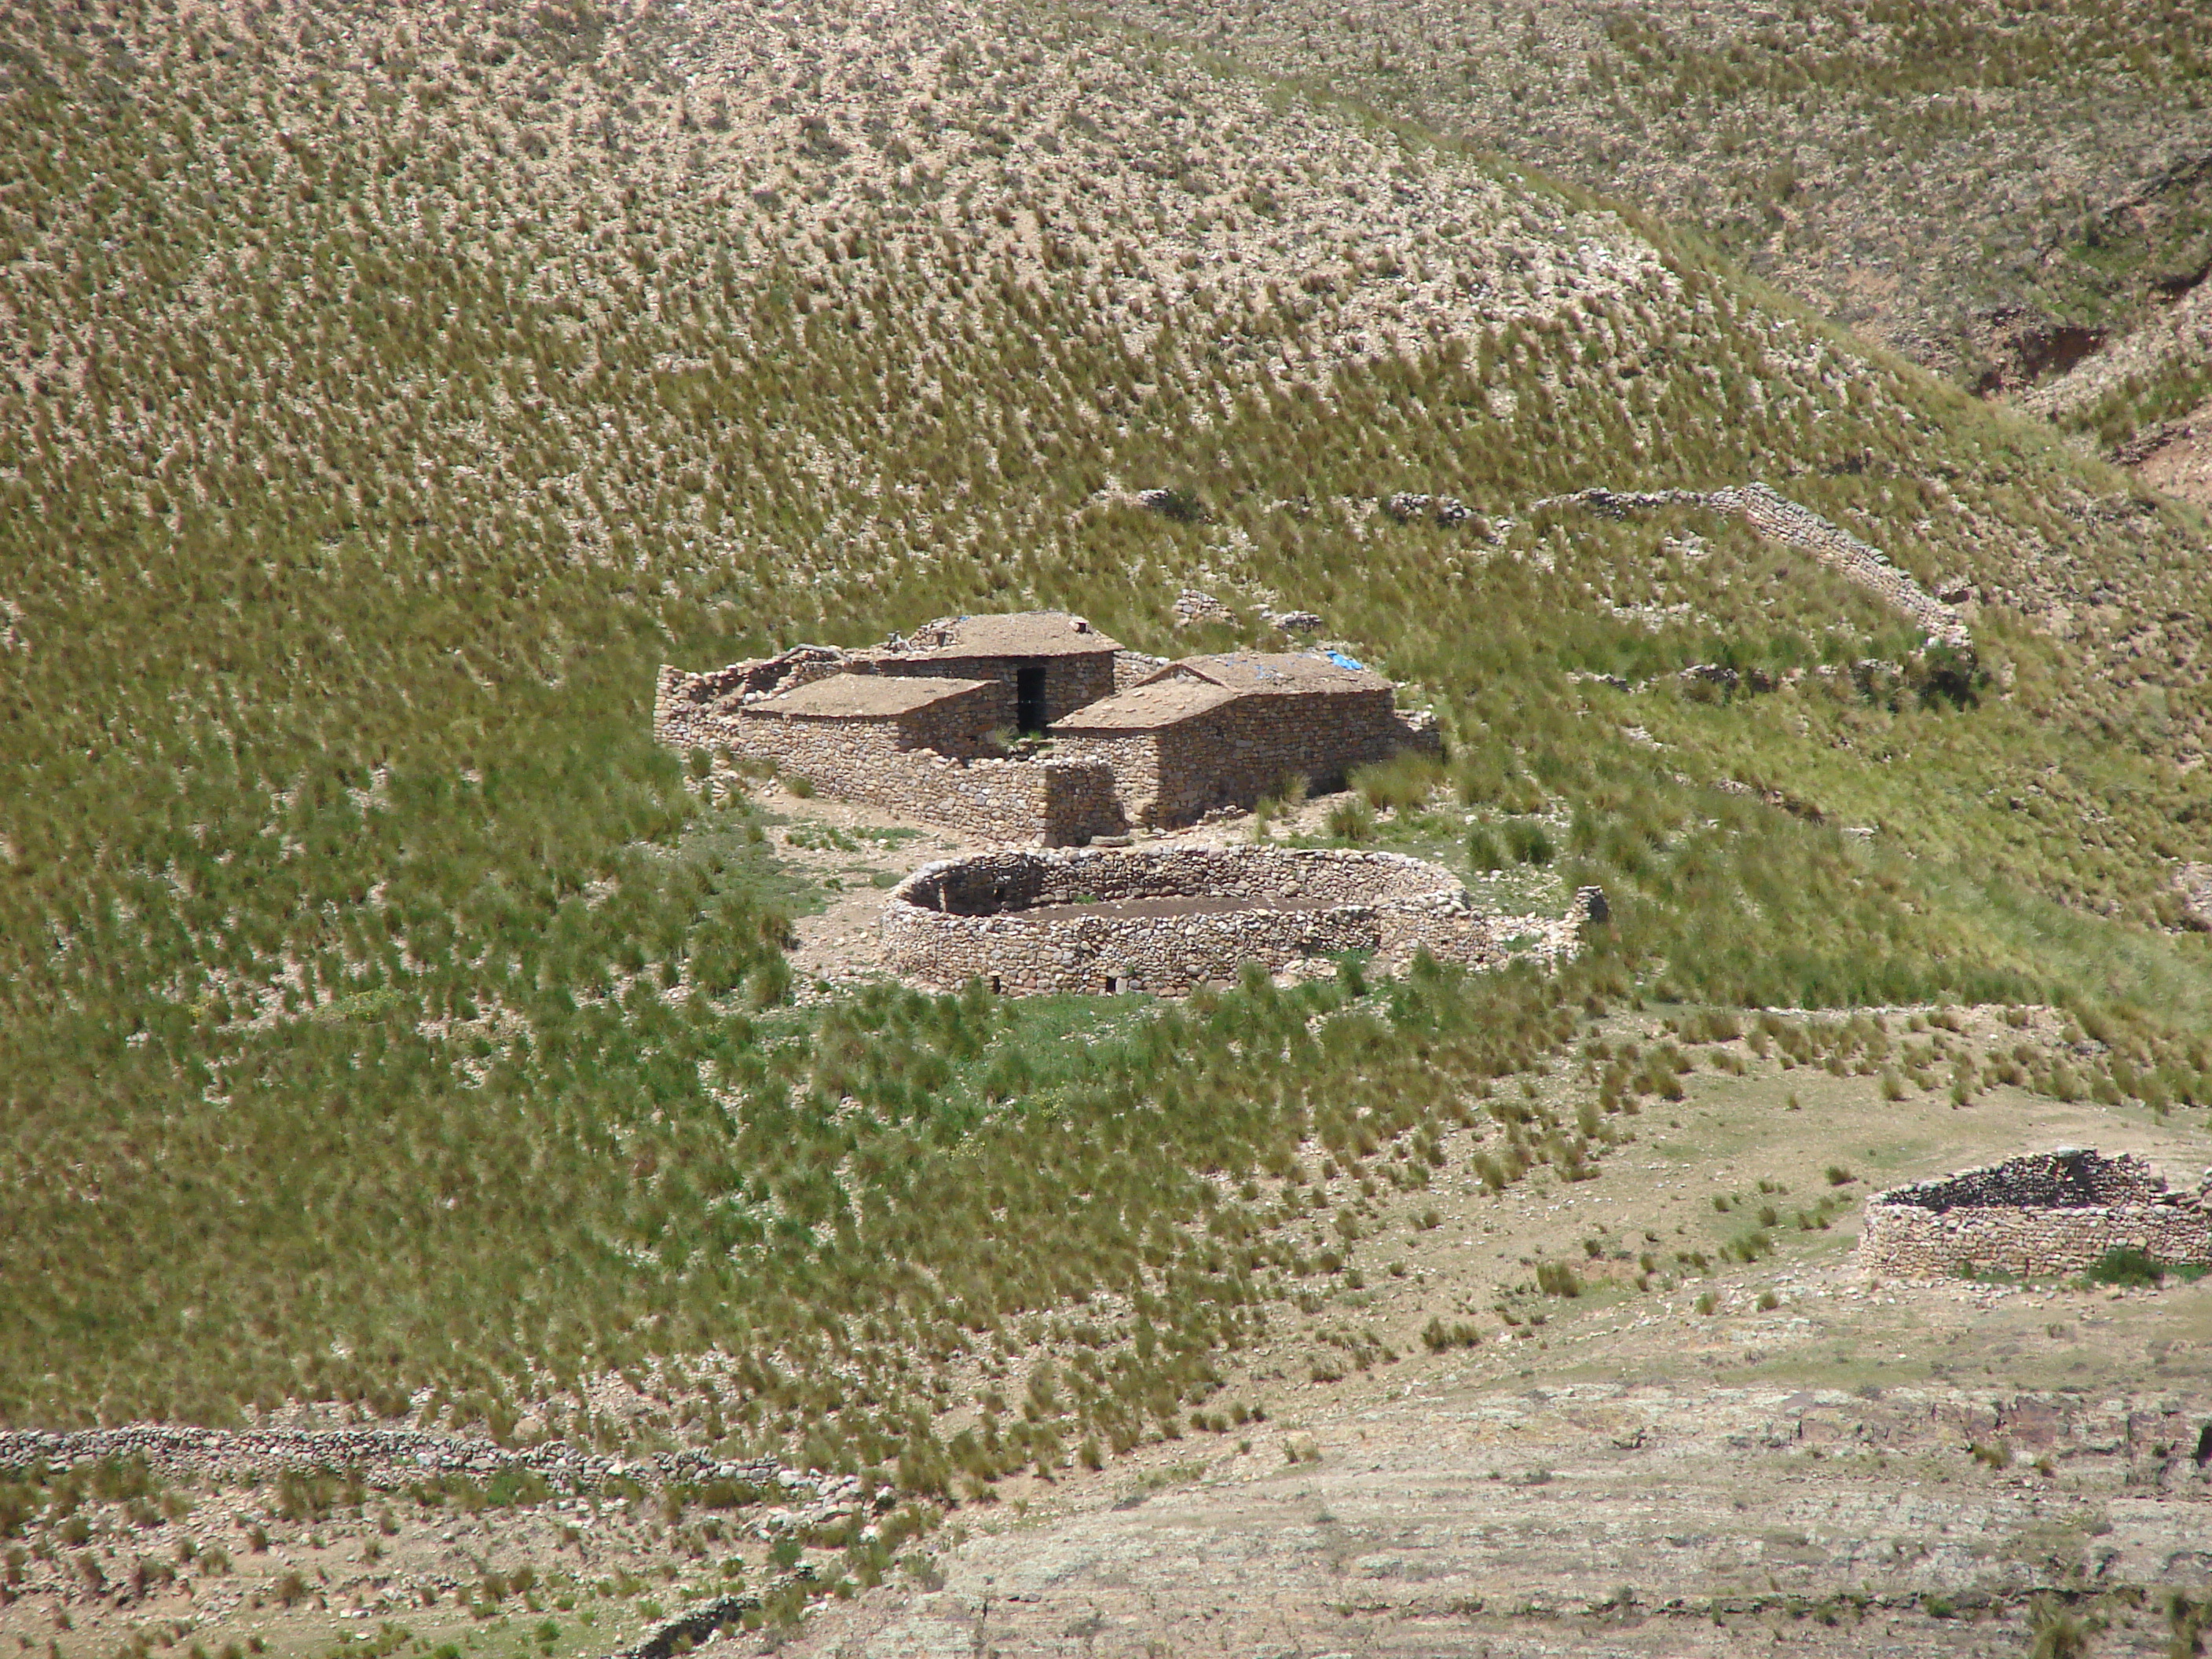 Foto: Casa al pie del cerro - Iscayachi (Tarija), Bolivia